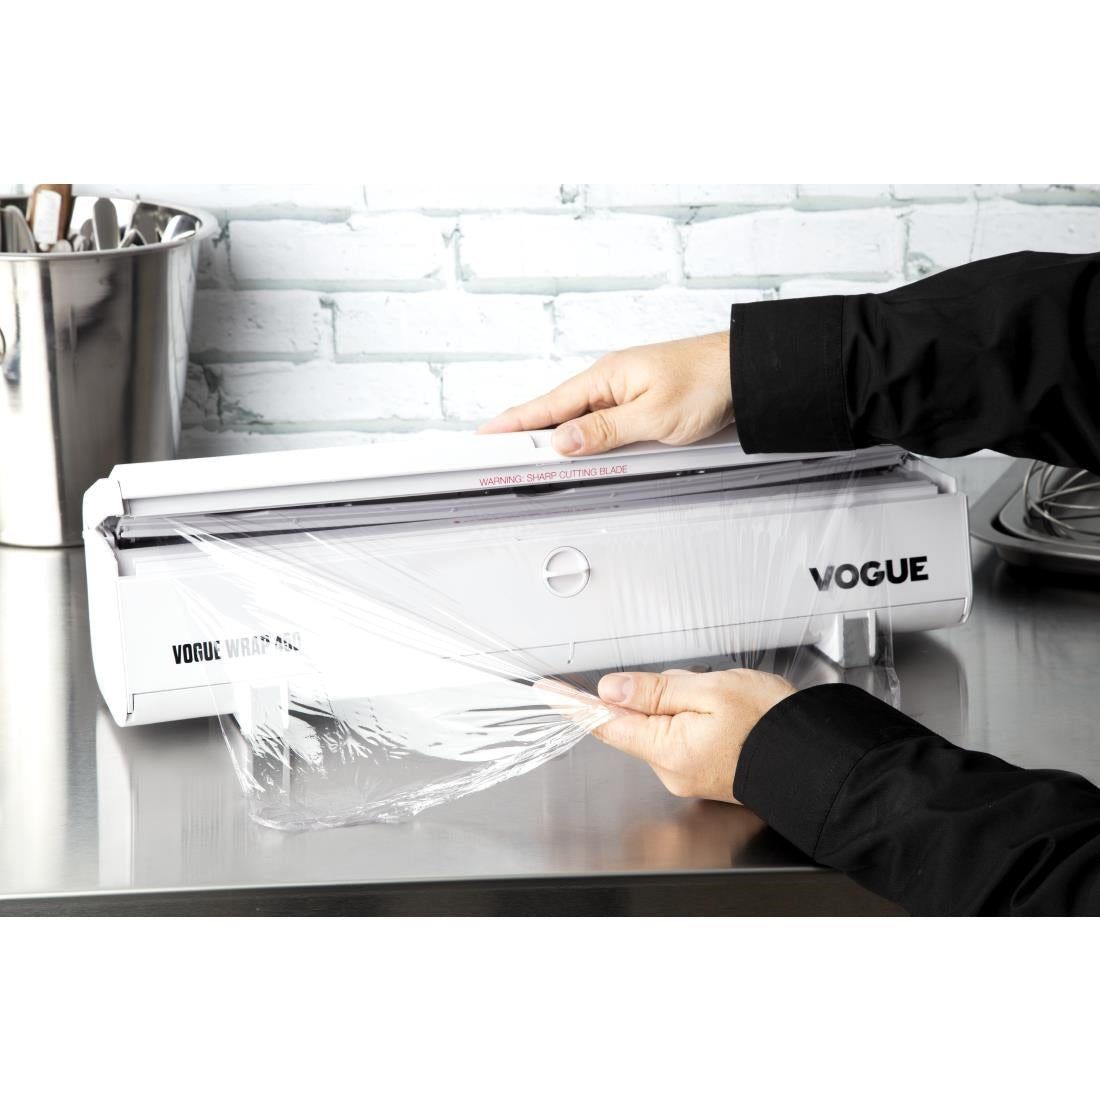 CW202 Vogue Wrap450 Cling Film, Foil and Baking Parchment Dispenser JD Catering Equipment Solutions Ltd